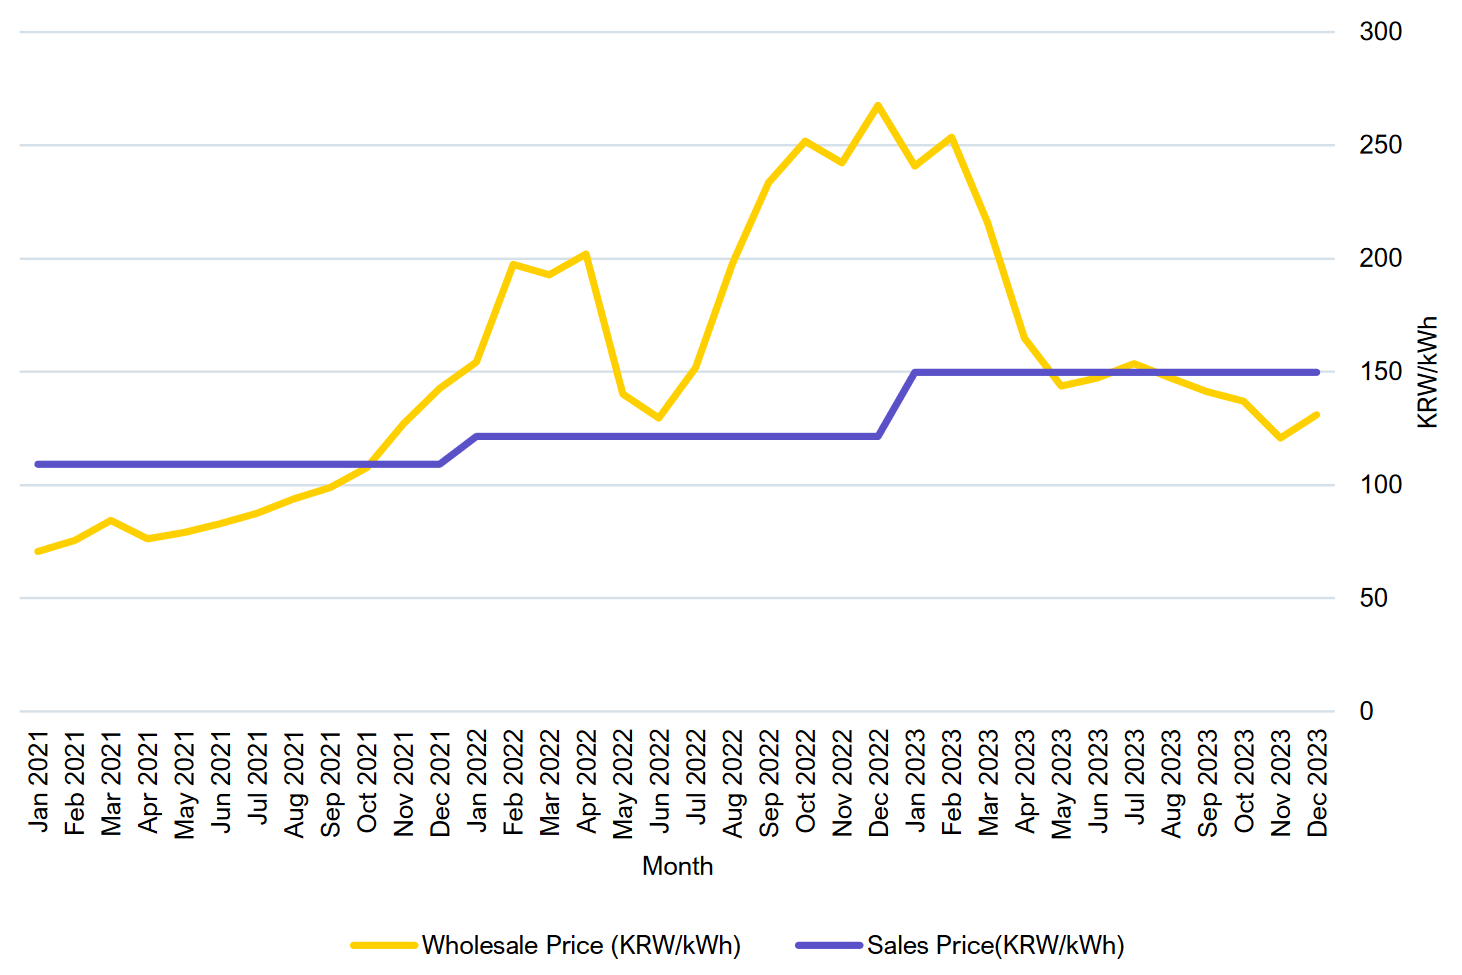 Wholesale Power Prices vs KEPCO’s Sales Prices (KRW per kWh), Source: IEEFA